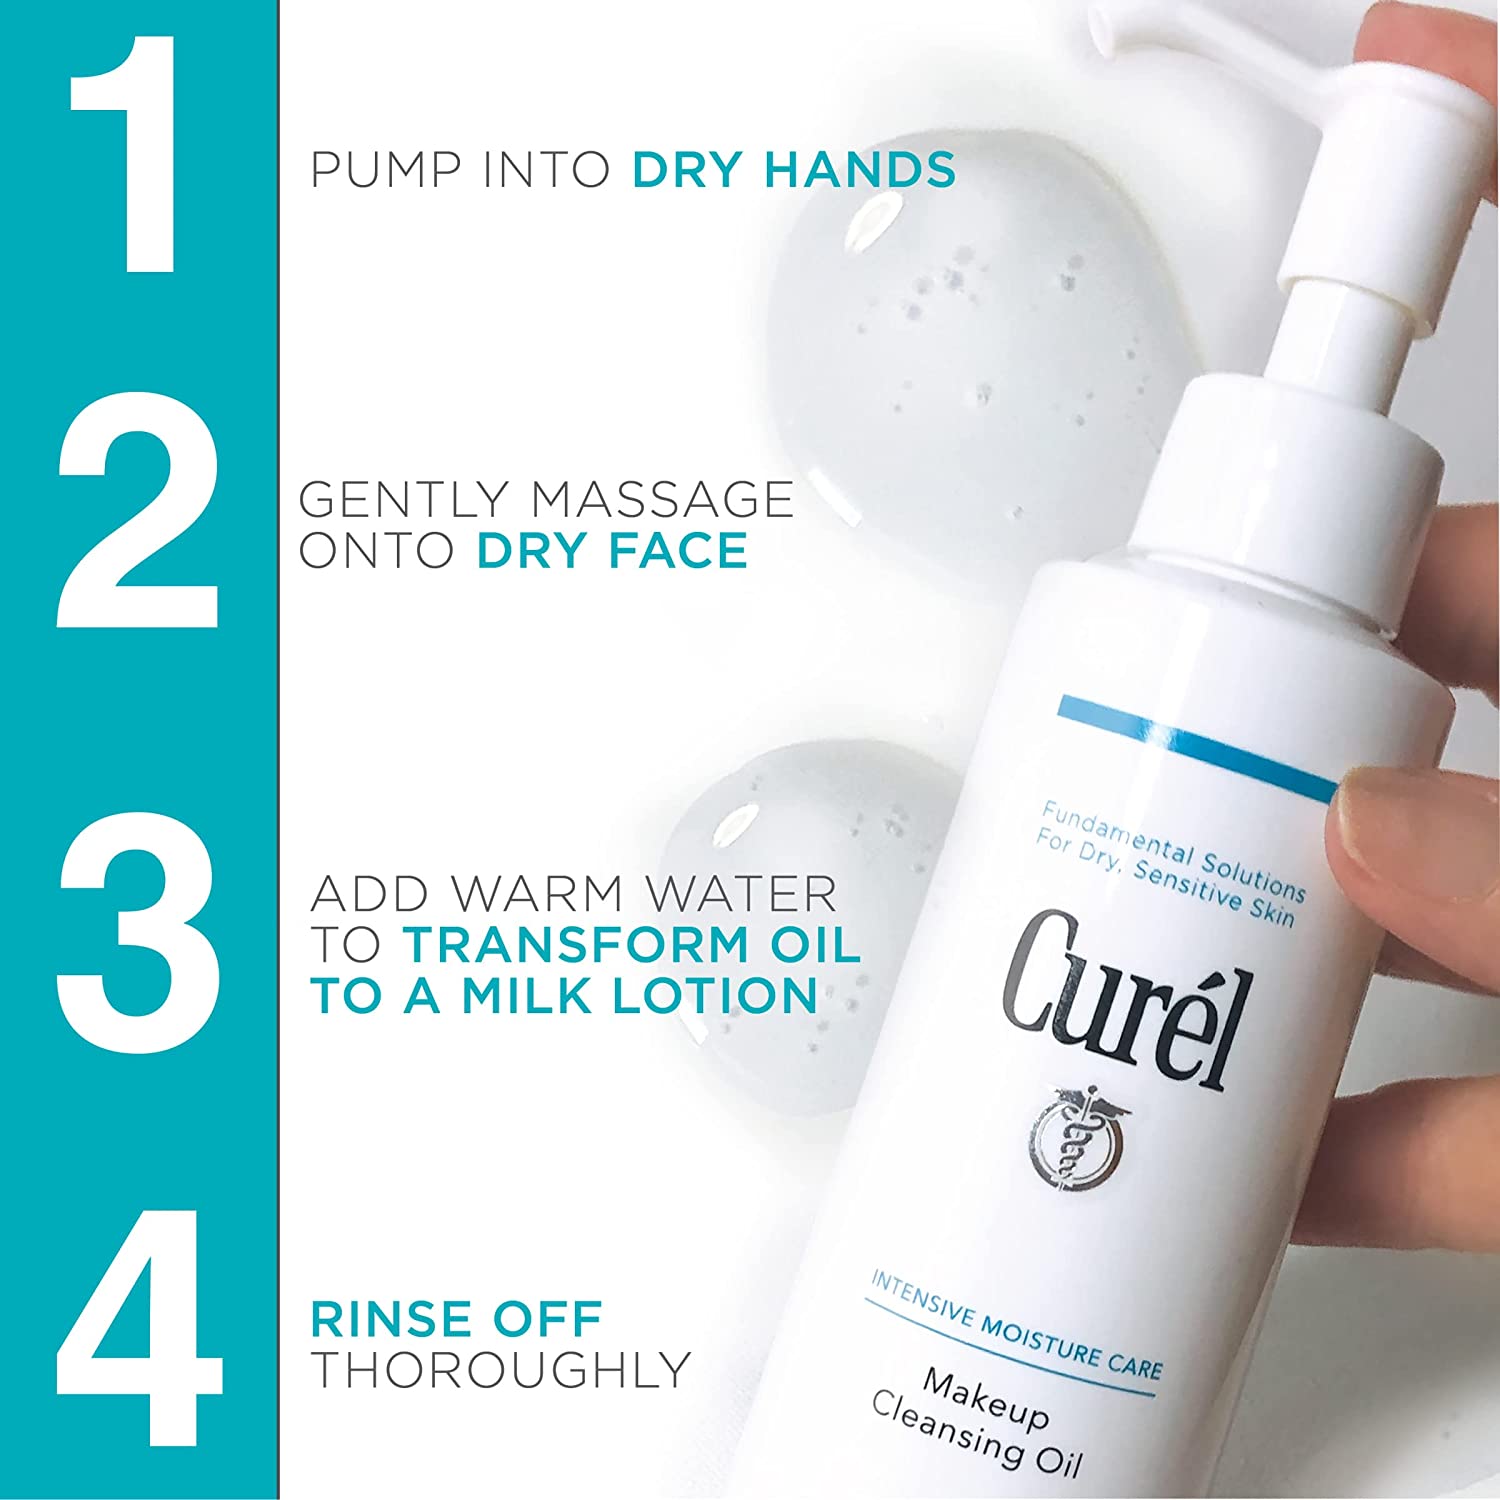 Curel Intensive Moisture Care Makeup Cleansing Oil